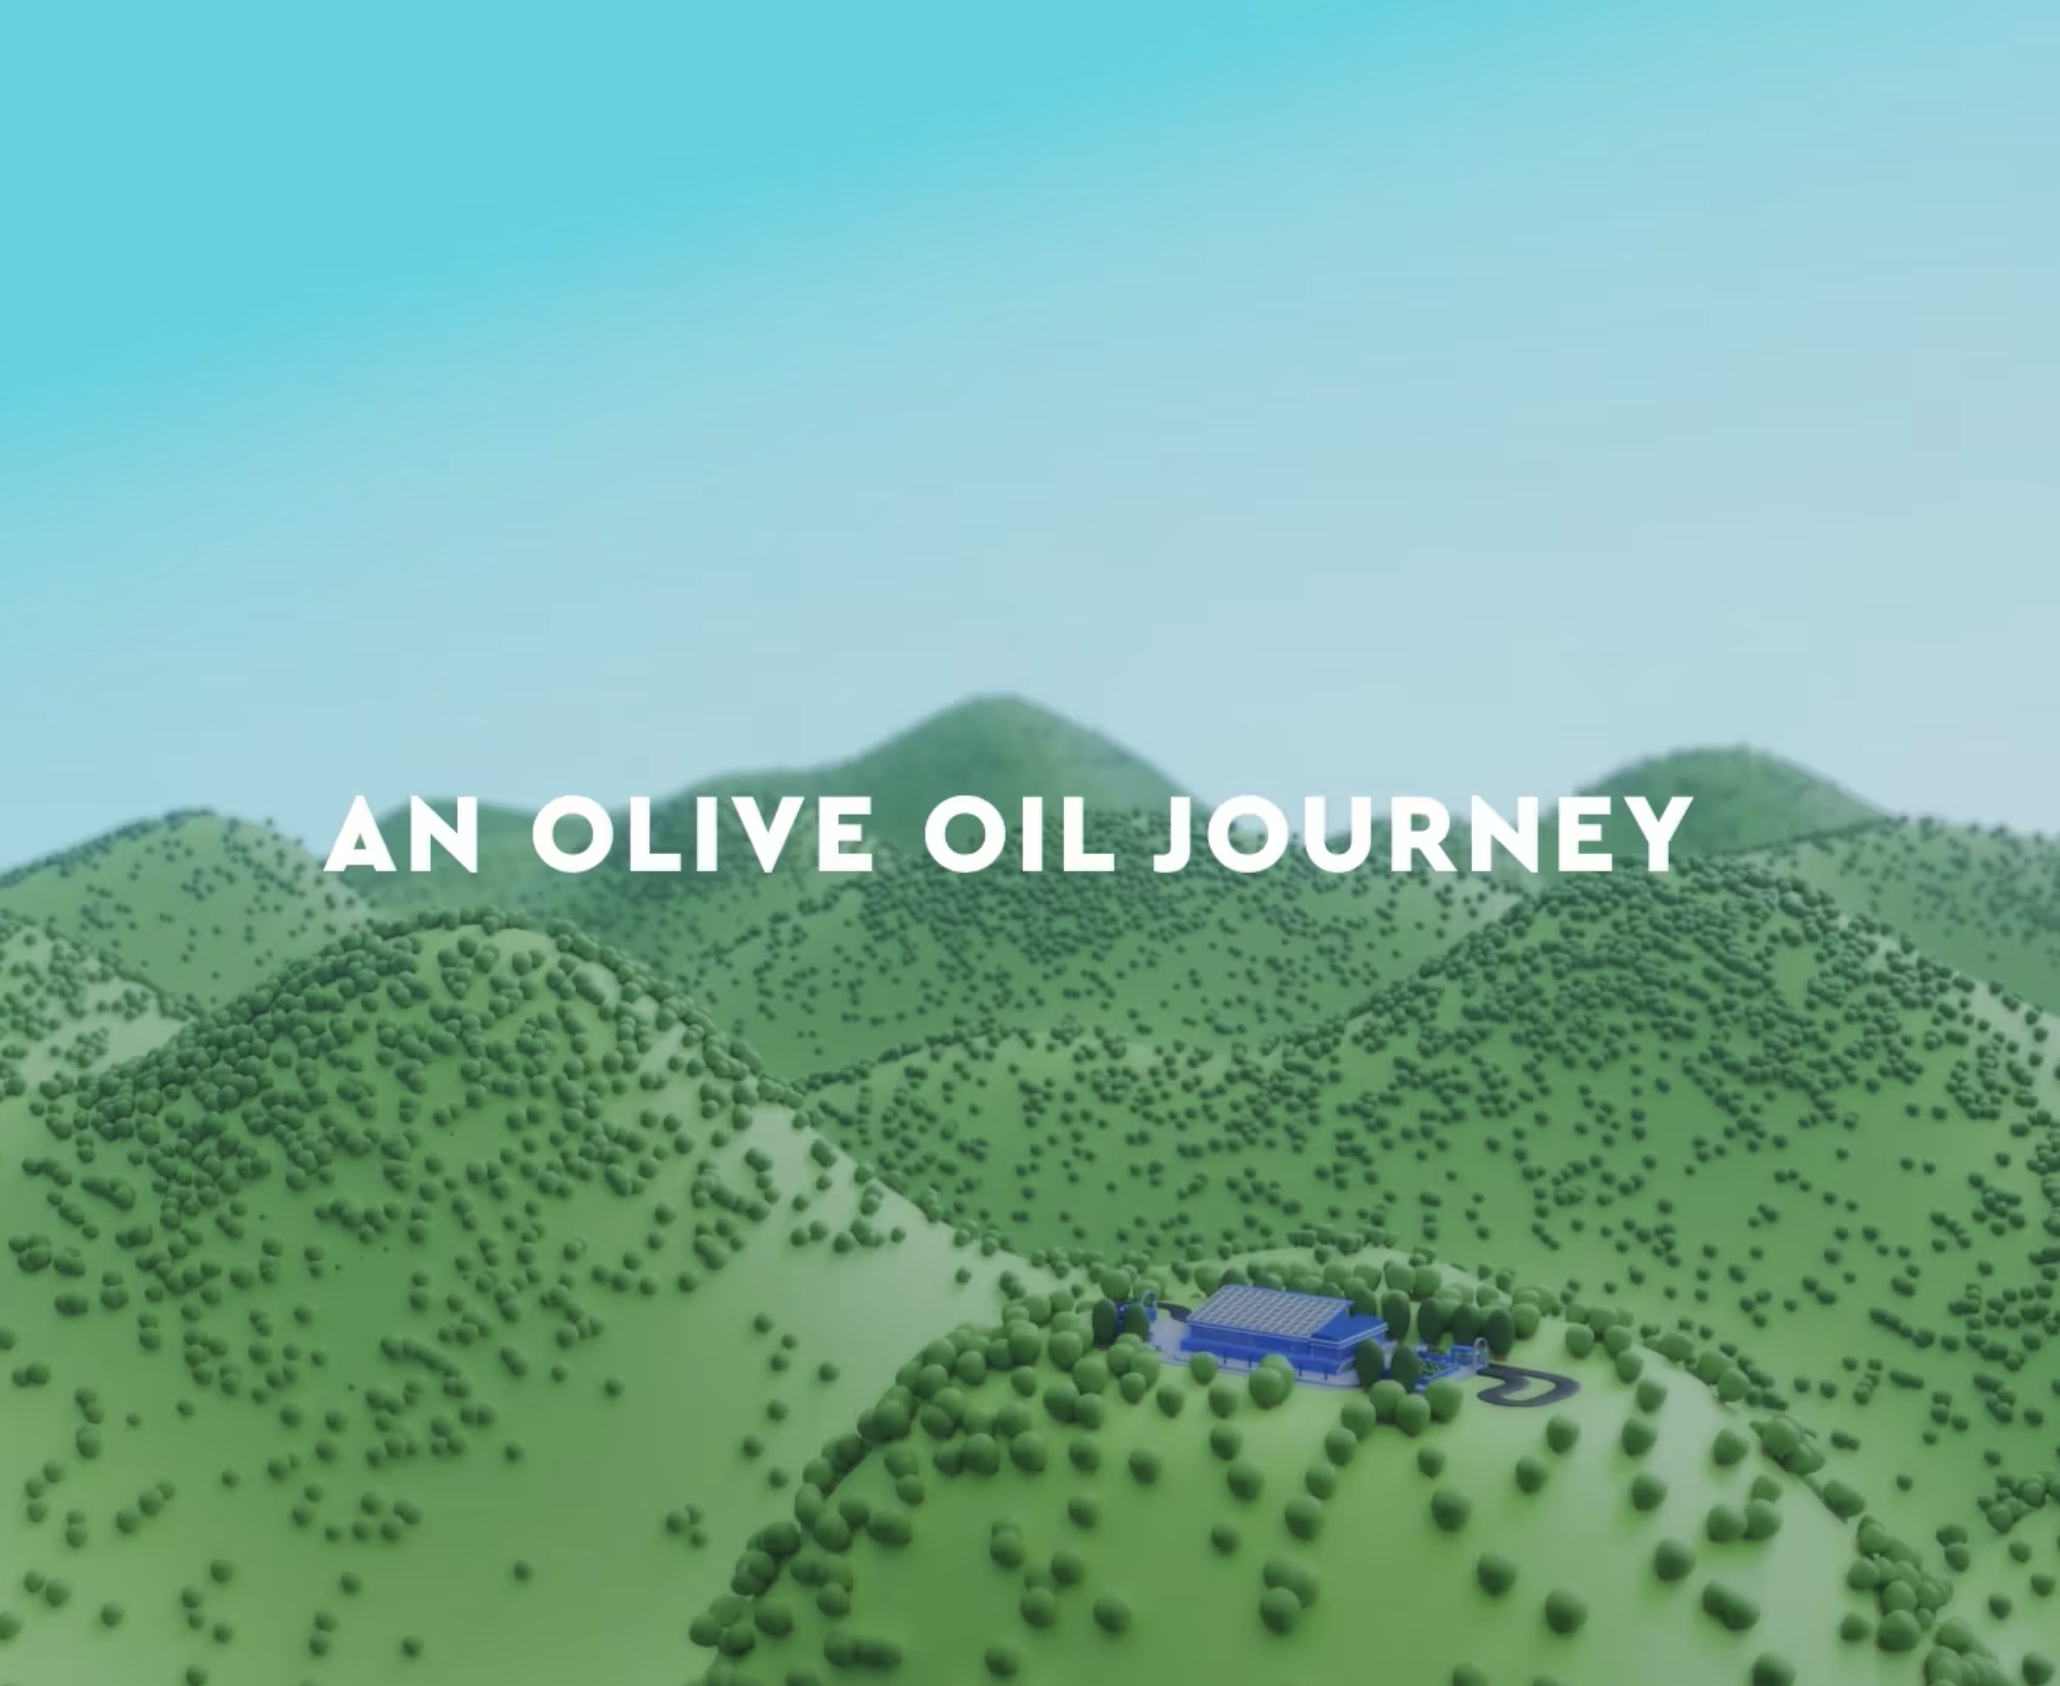 Certified Origins - An Olive Oil Journey - Video